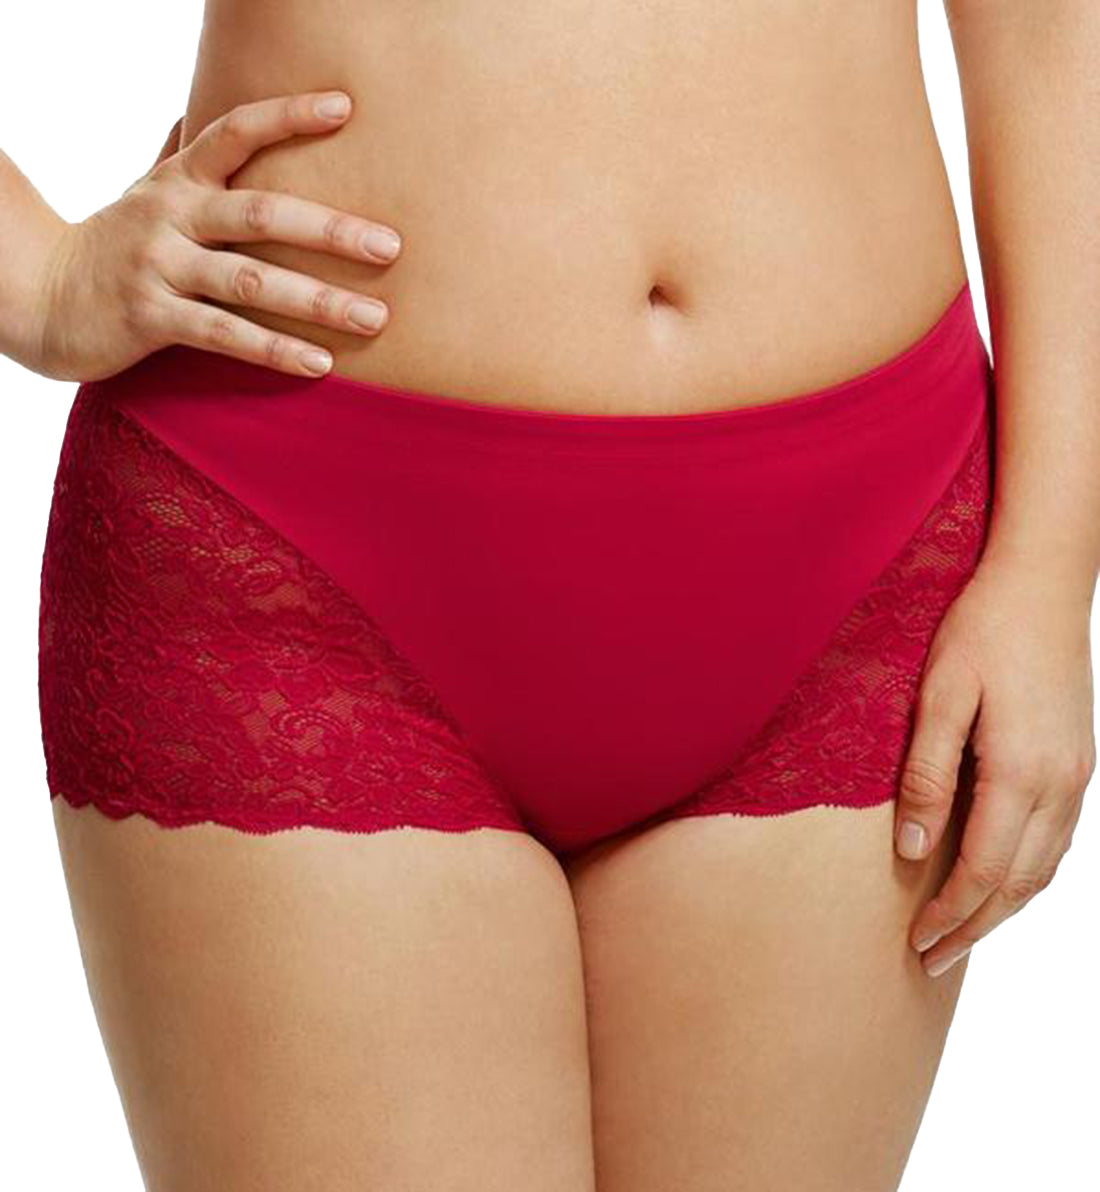 Elila Stretch Lace Cheeky Full Panty (3311),Medium,Red - Red,Medium